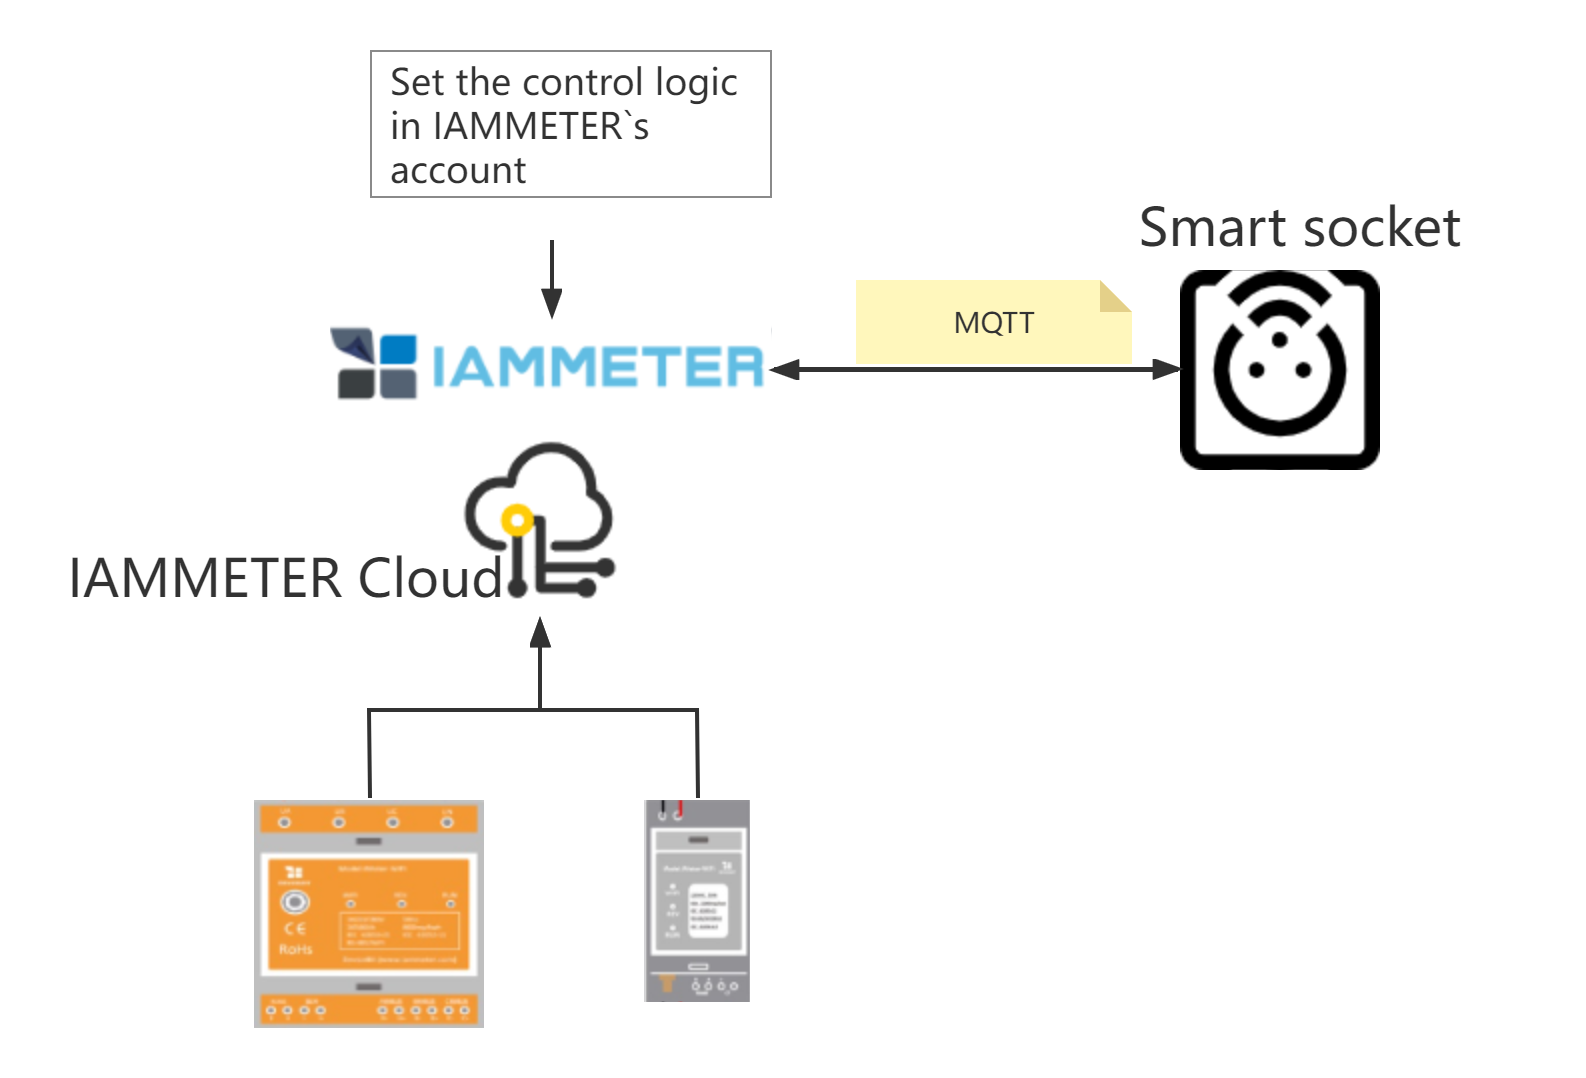 controlla lo smart socket mqtt nel cloud IAMMETER